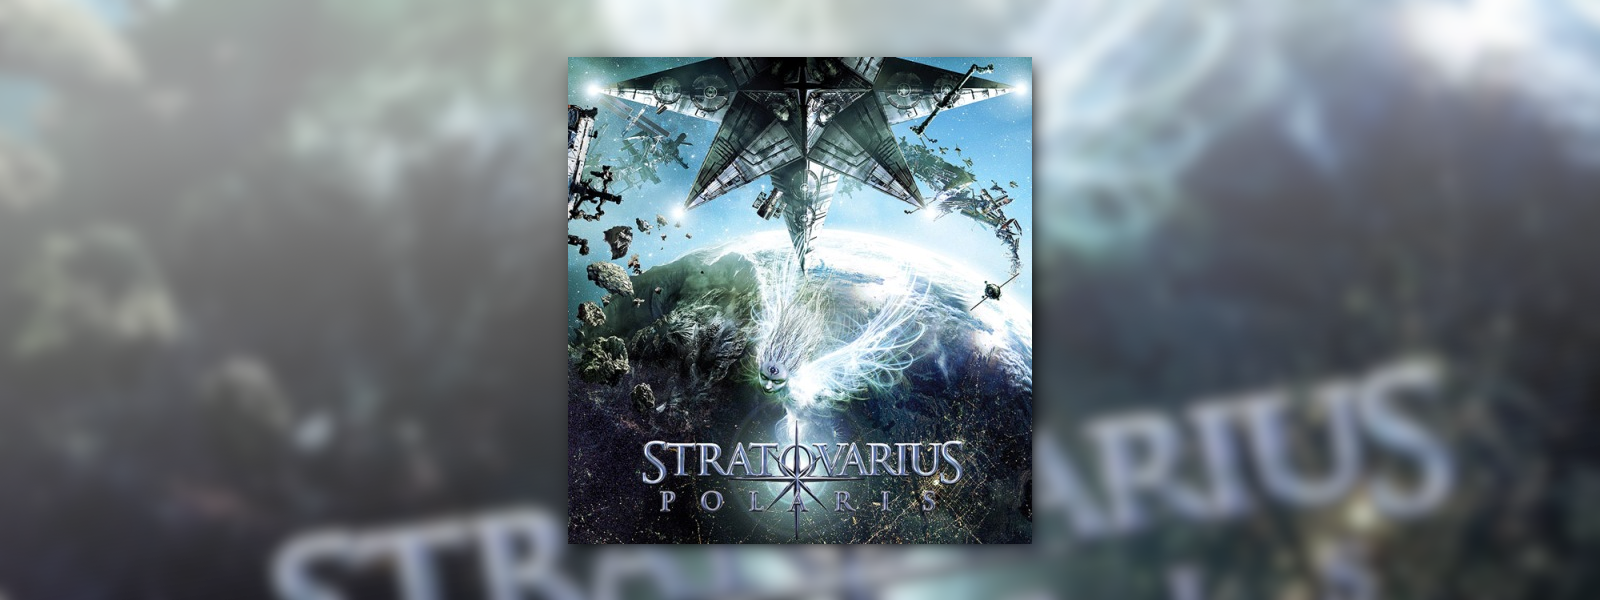 Stratovarius - Polaris (2009)